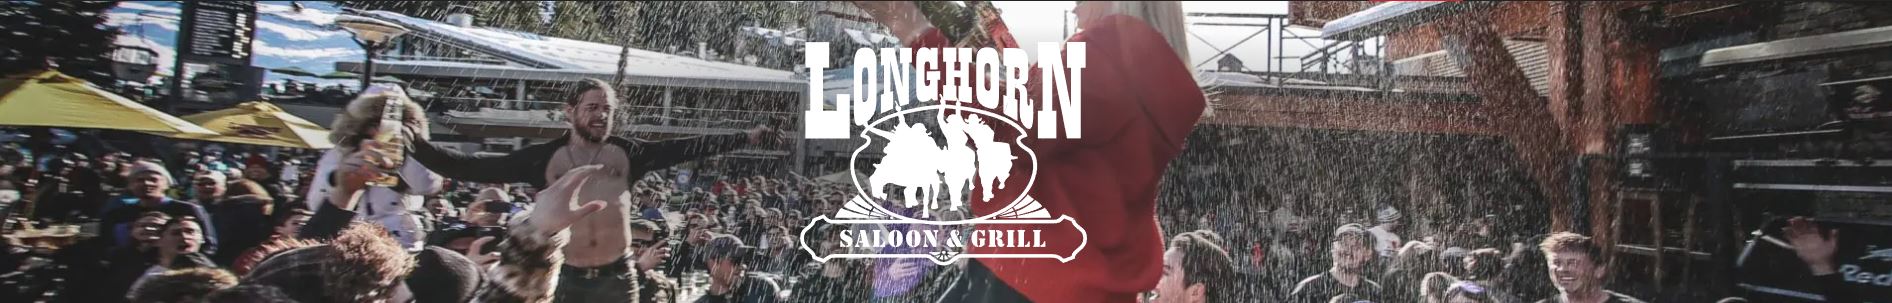 The Longhorn Saloon